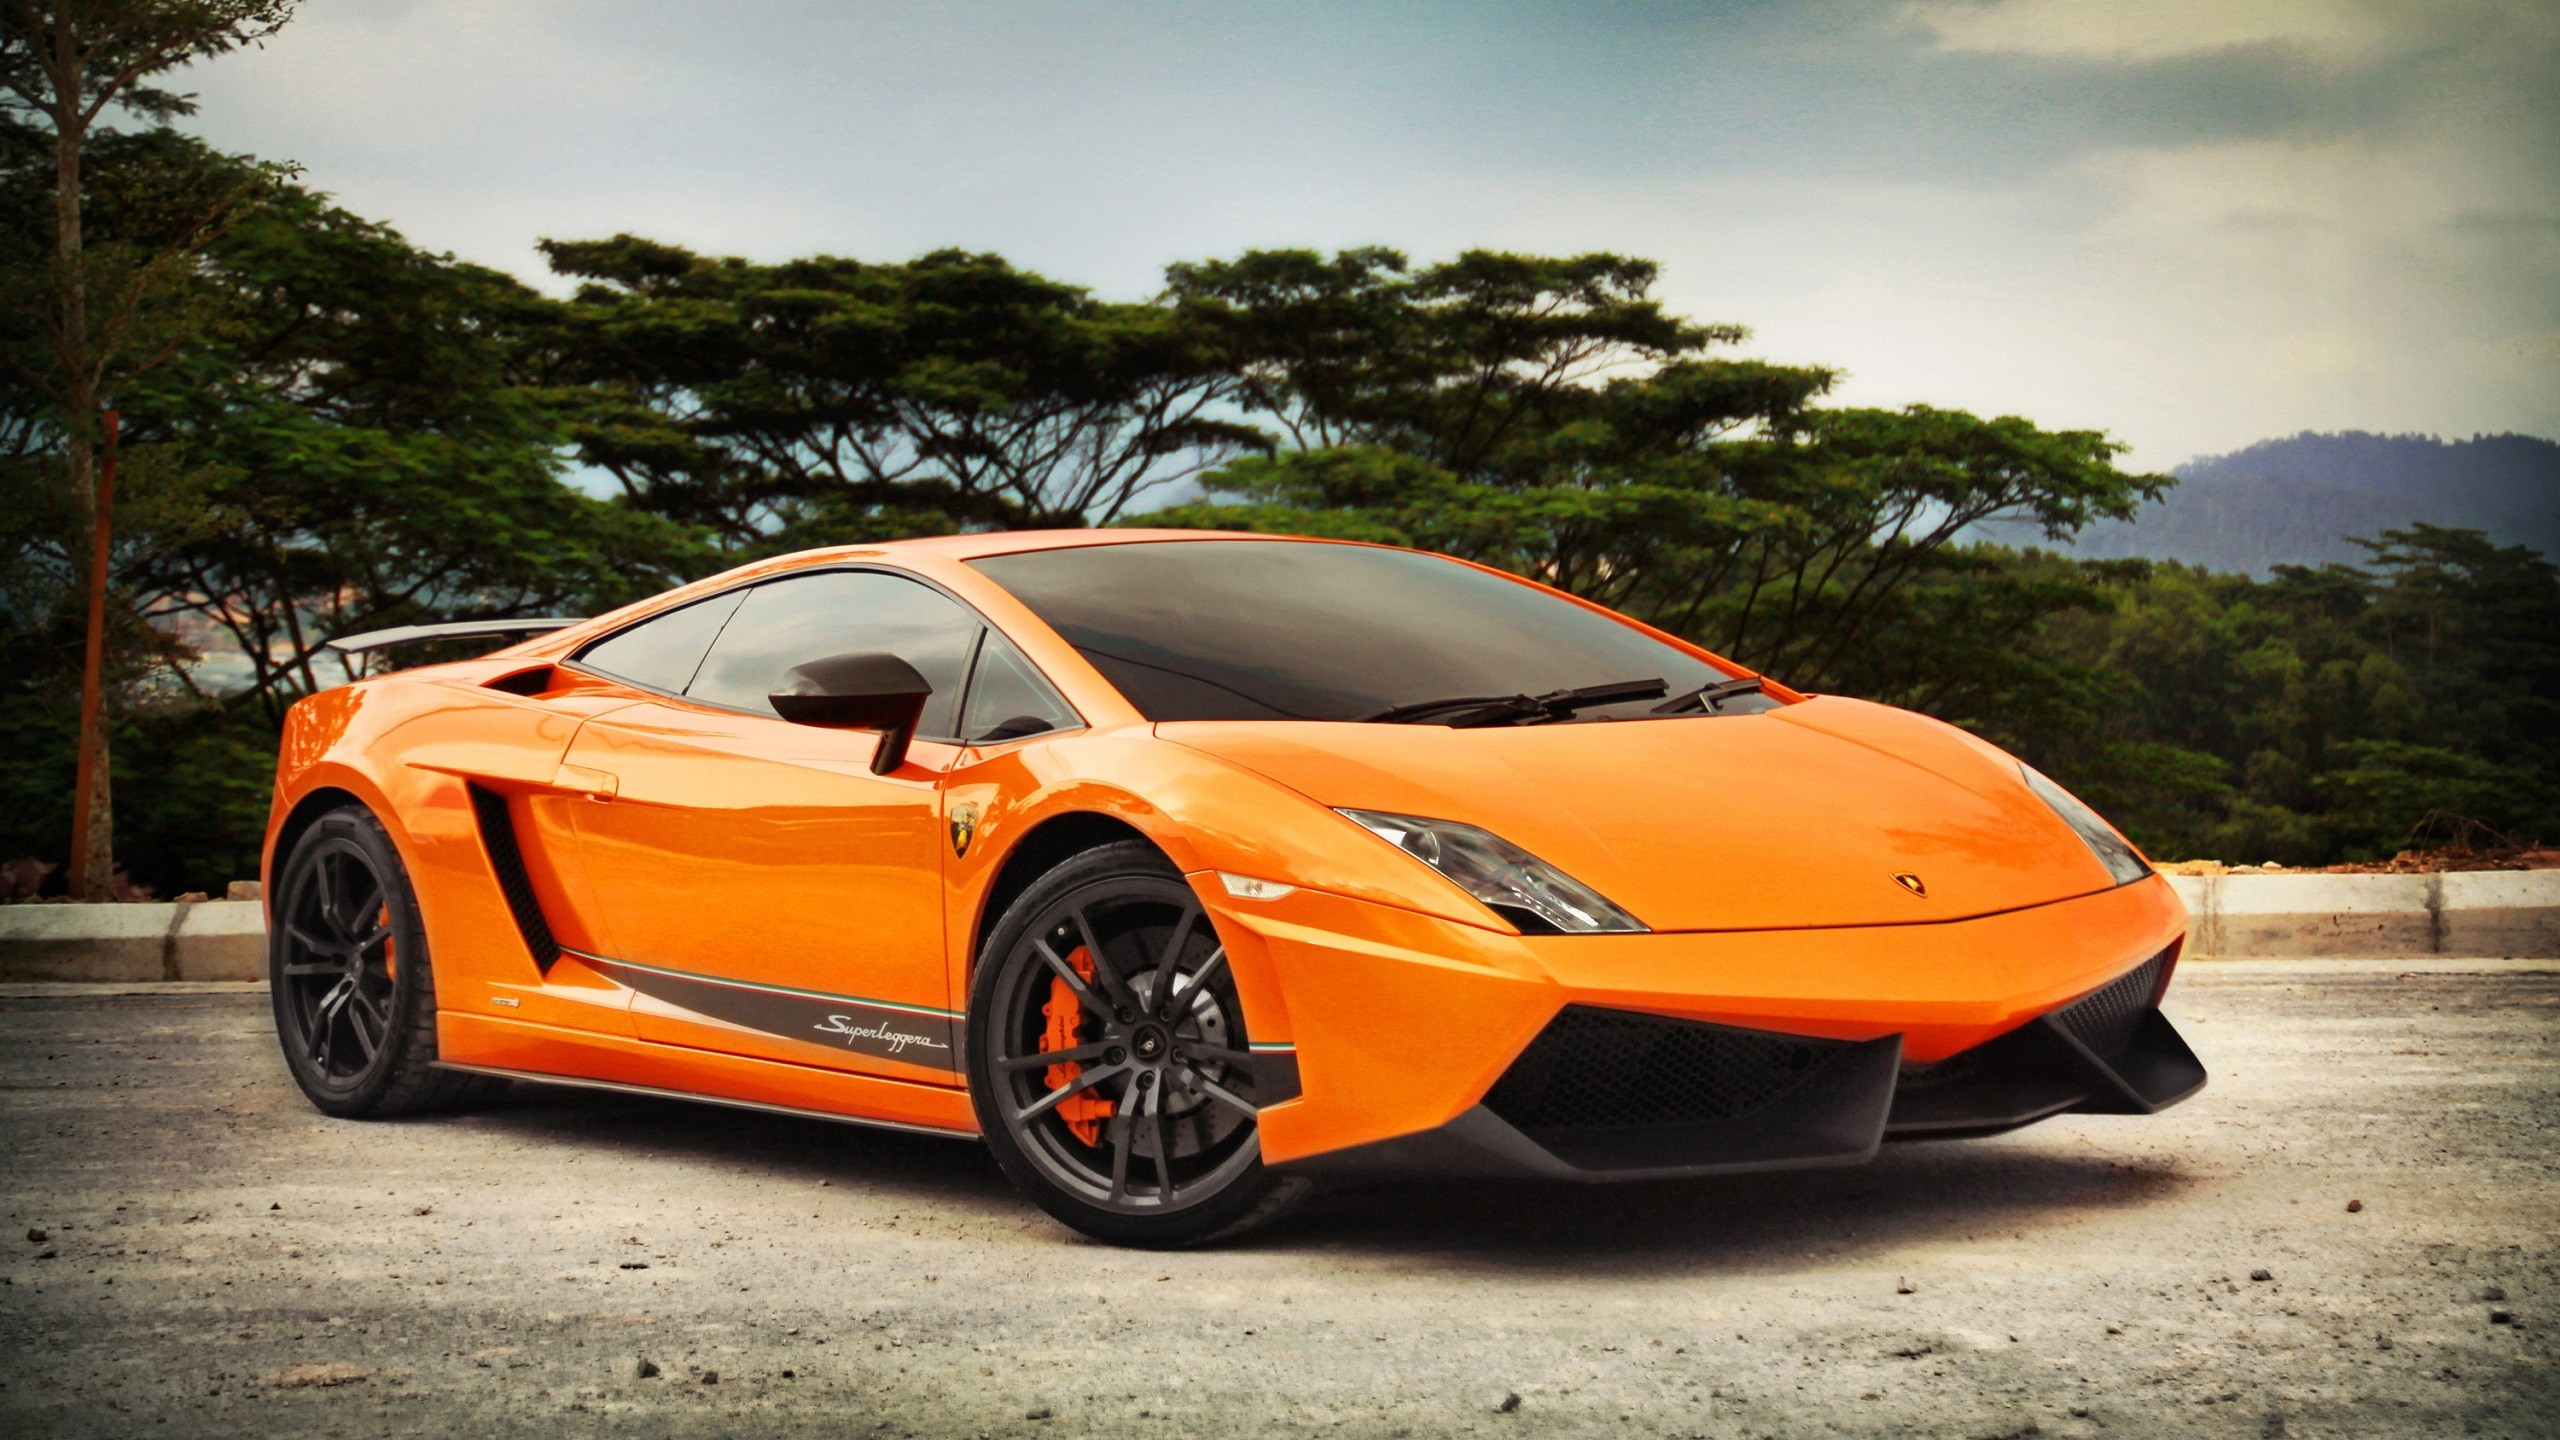 General 2560x1440 Lamborghini orange cars vehicle car supercars